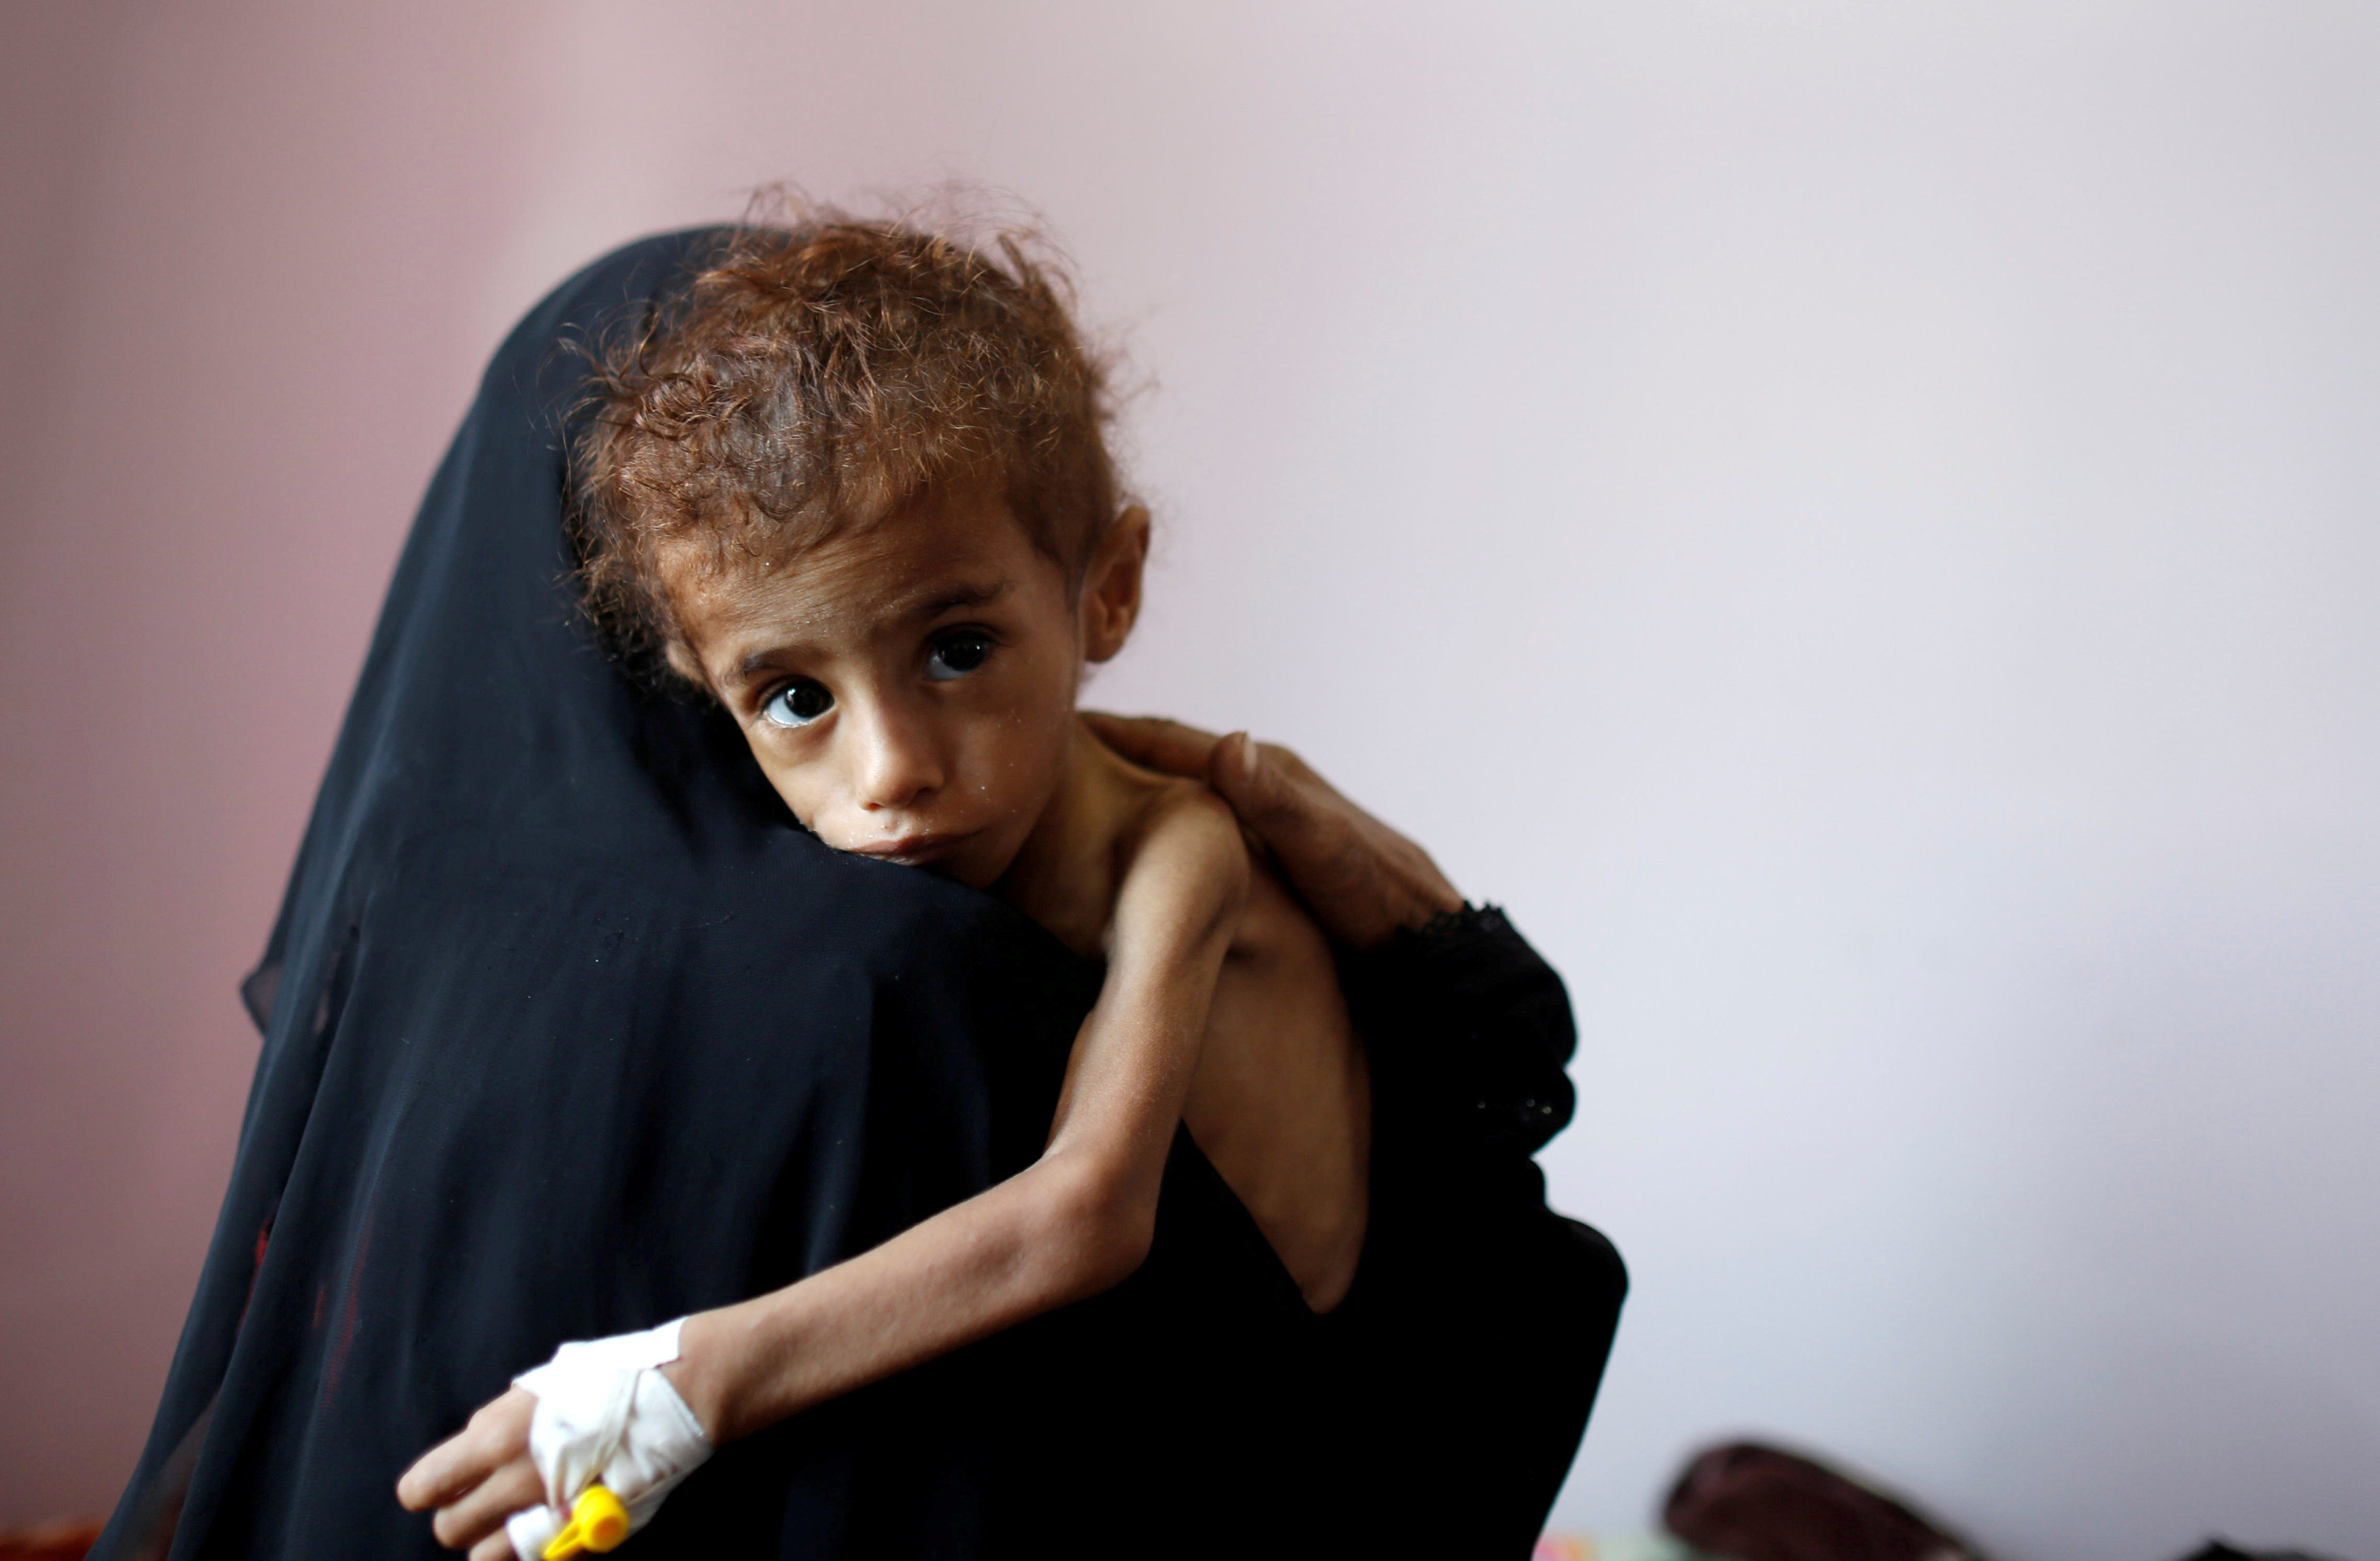 Catholic Church and aid groups sound alarm over humanitarian crisis in Yemen